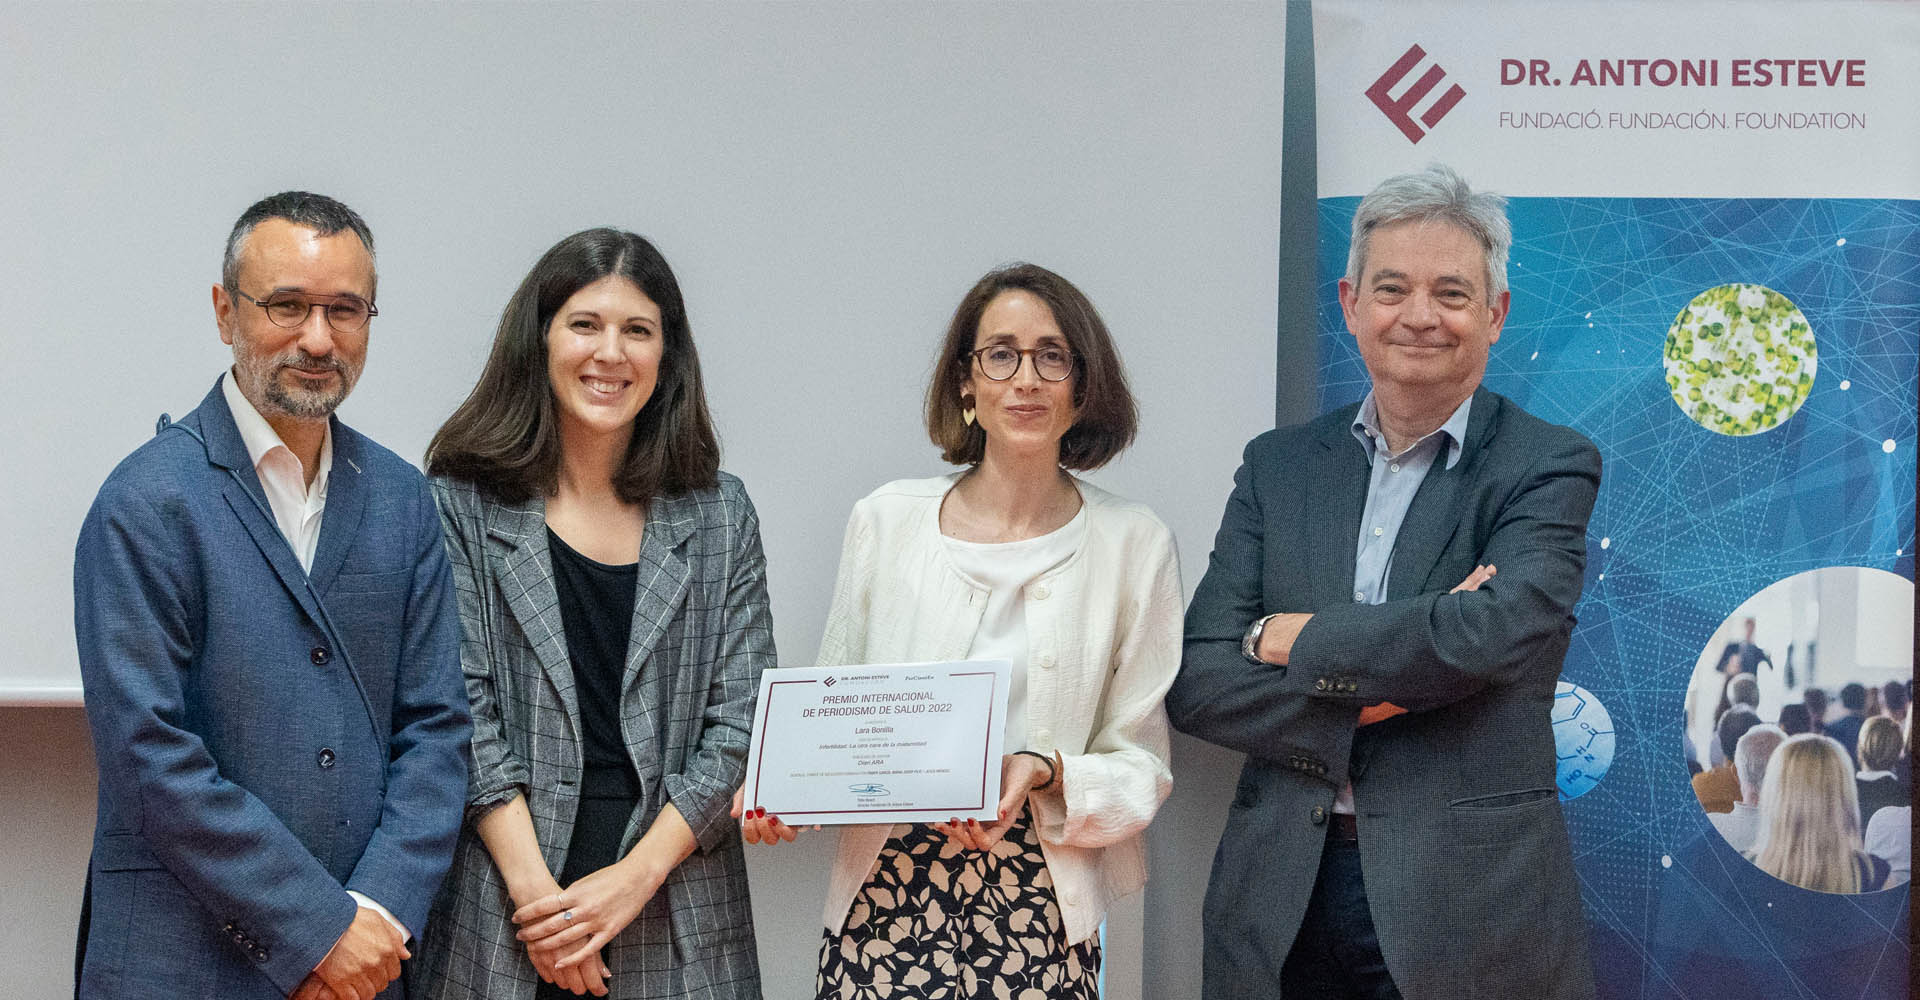 Dr. Antoni Esteve Foundation - PerCientEx Health Journalism International Award